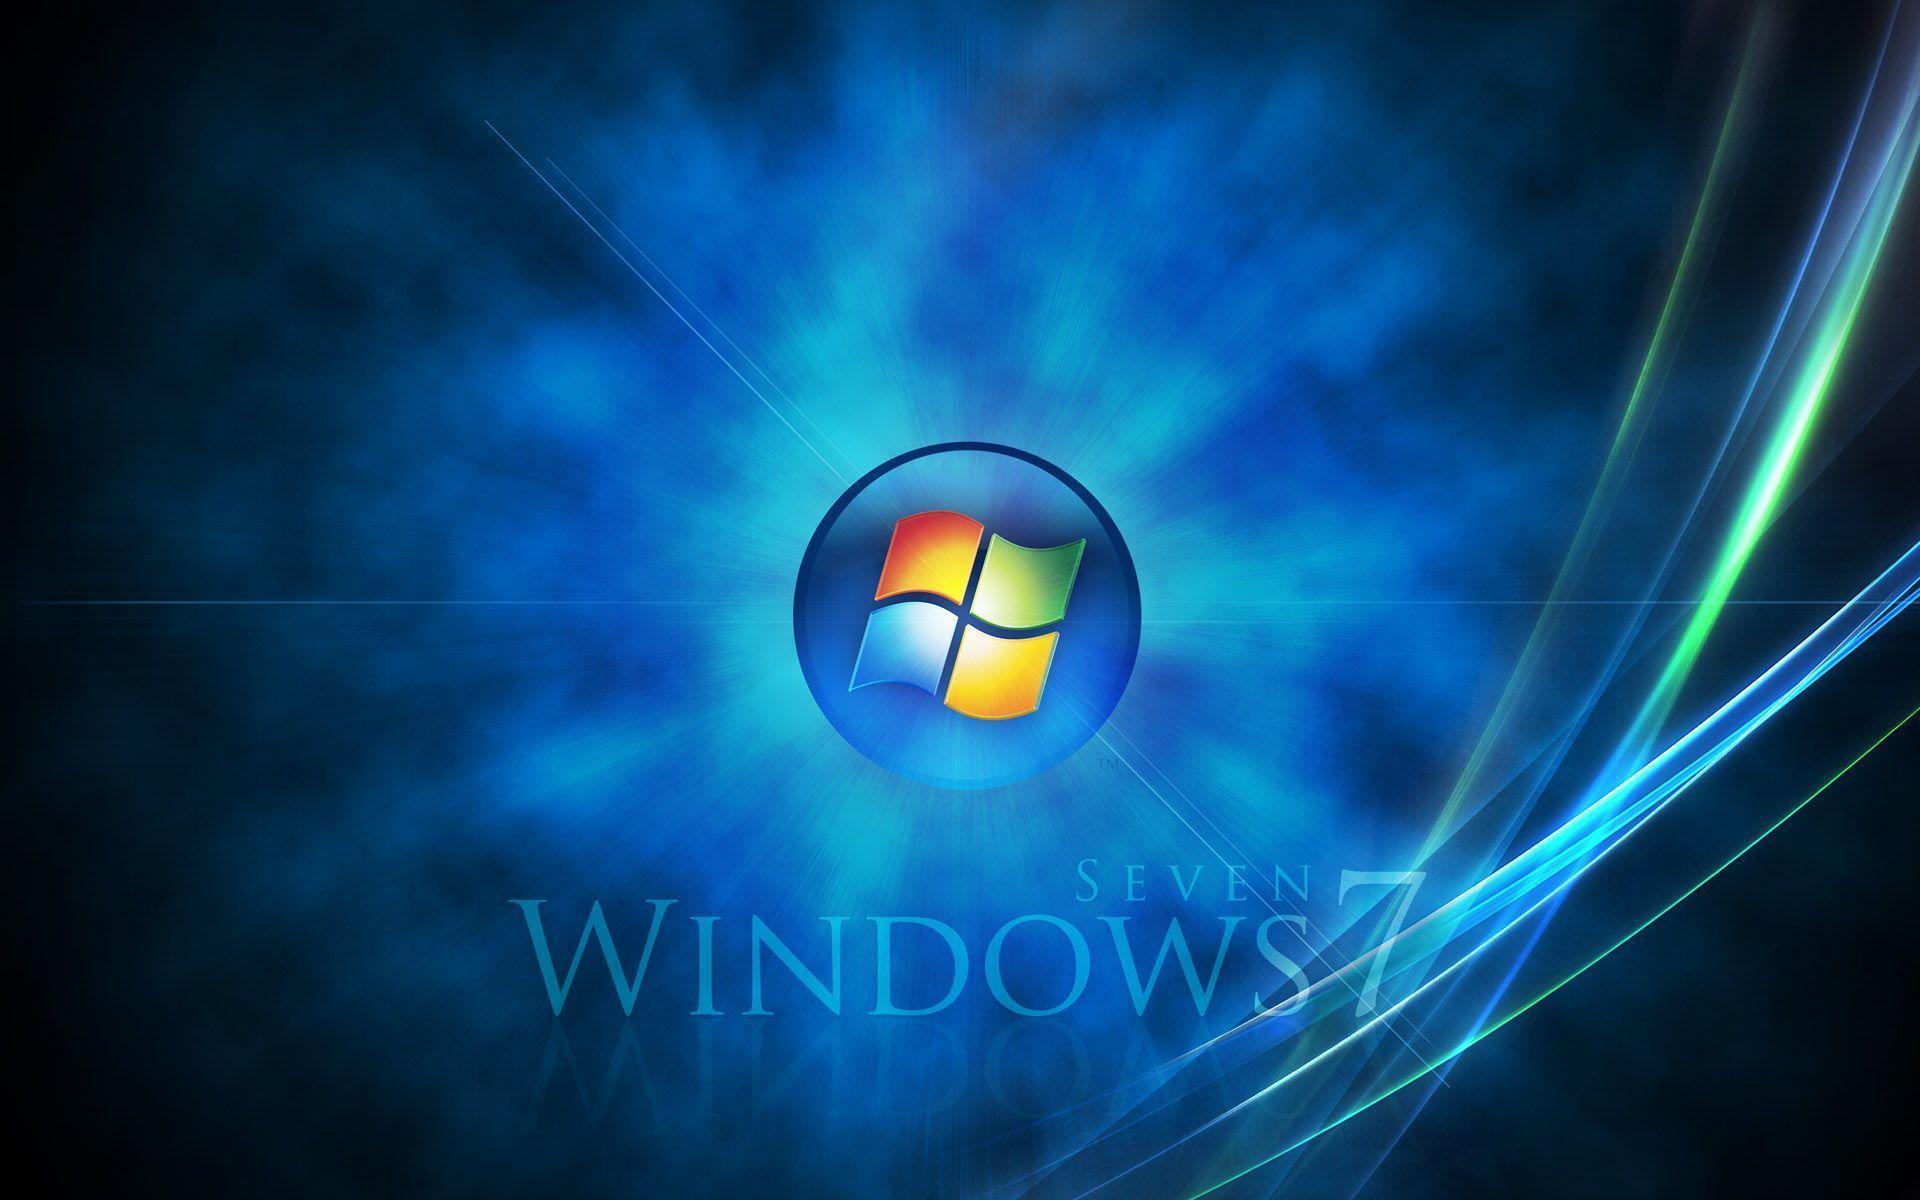 Desktop Background For Windows 7. Piccry.com: Picture Idea Gallery